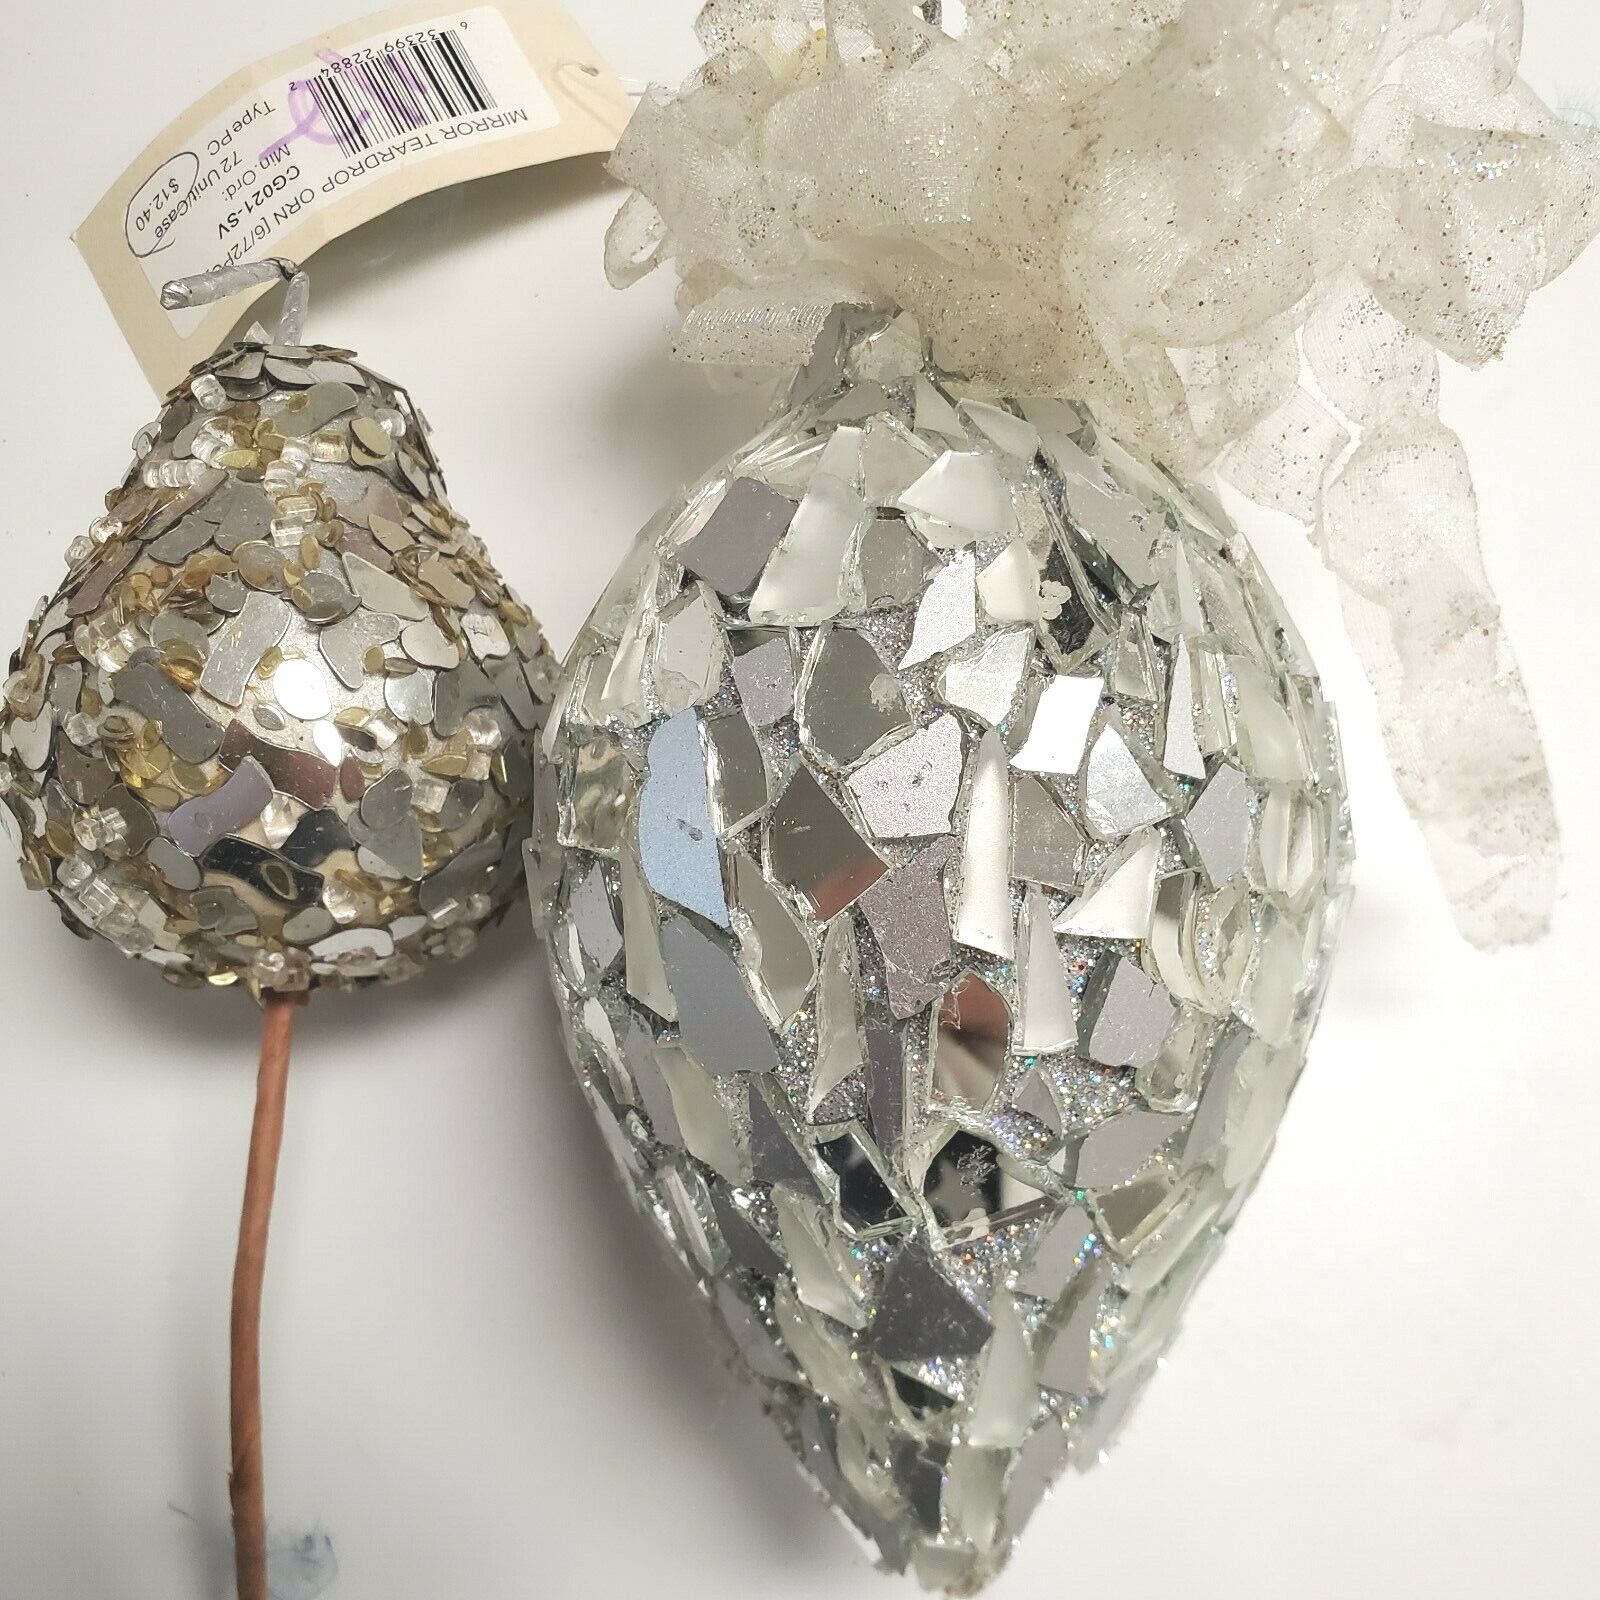 2 Broken Glass Encrusted Silver Ornament Small Silver and Gold Ornament